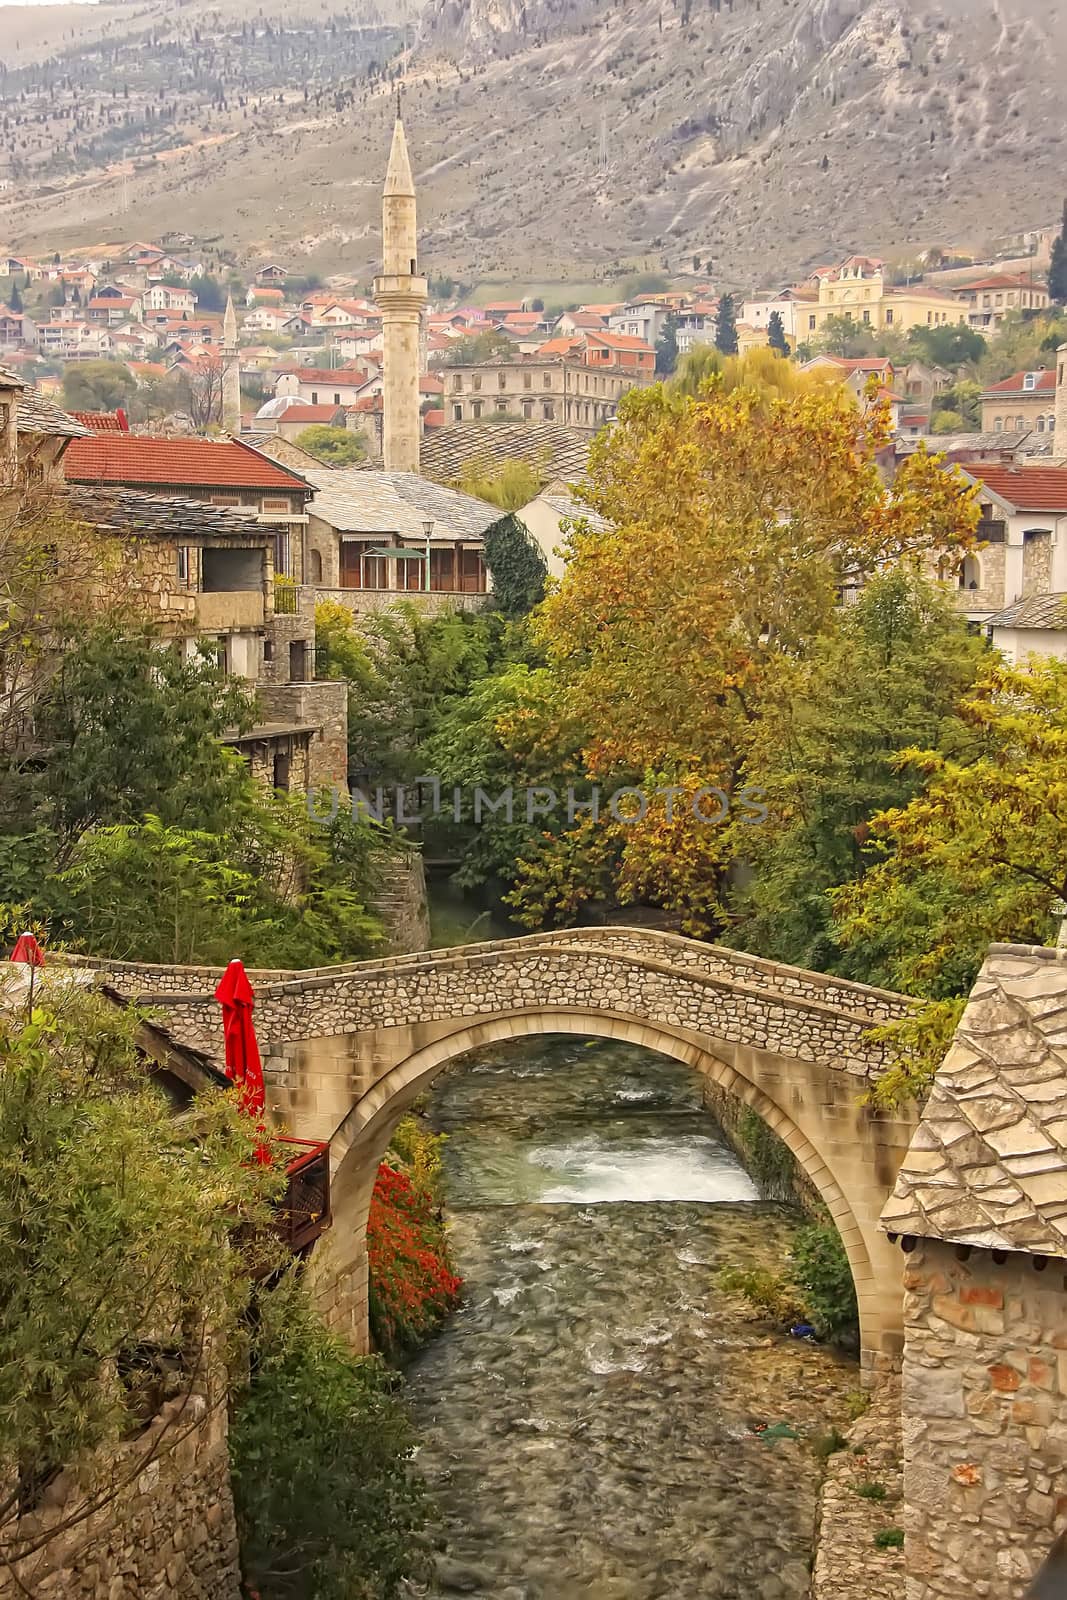 Crooked Bridge, Mostar, Bosnia and Herzegovina by donya_nedomam